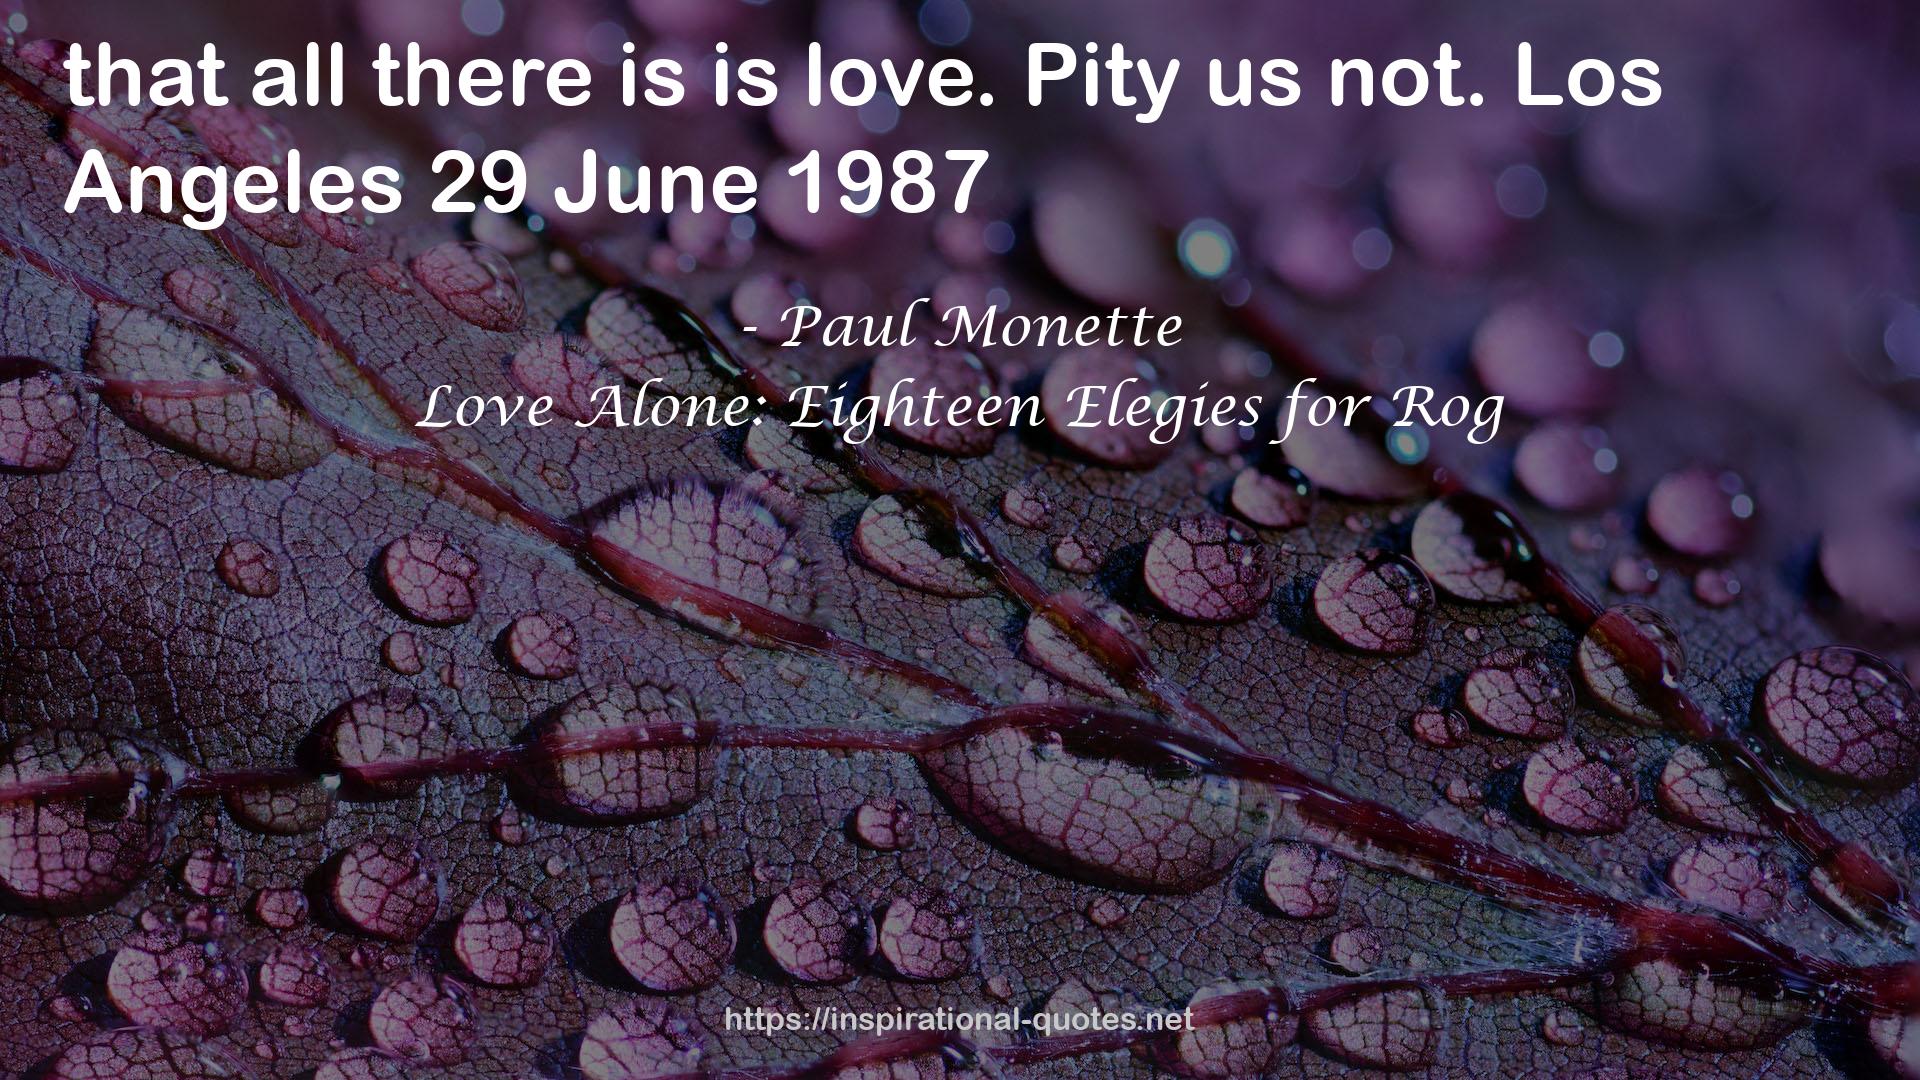 Love Alone: Eighteen Elegies for Rog QUOTES